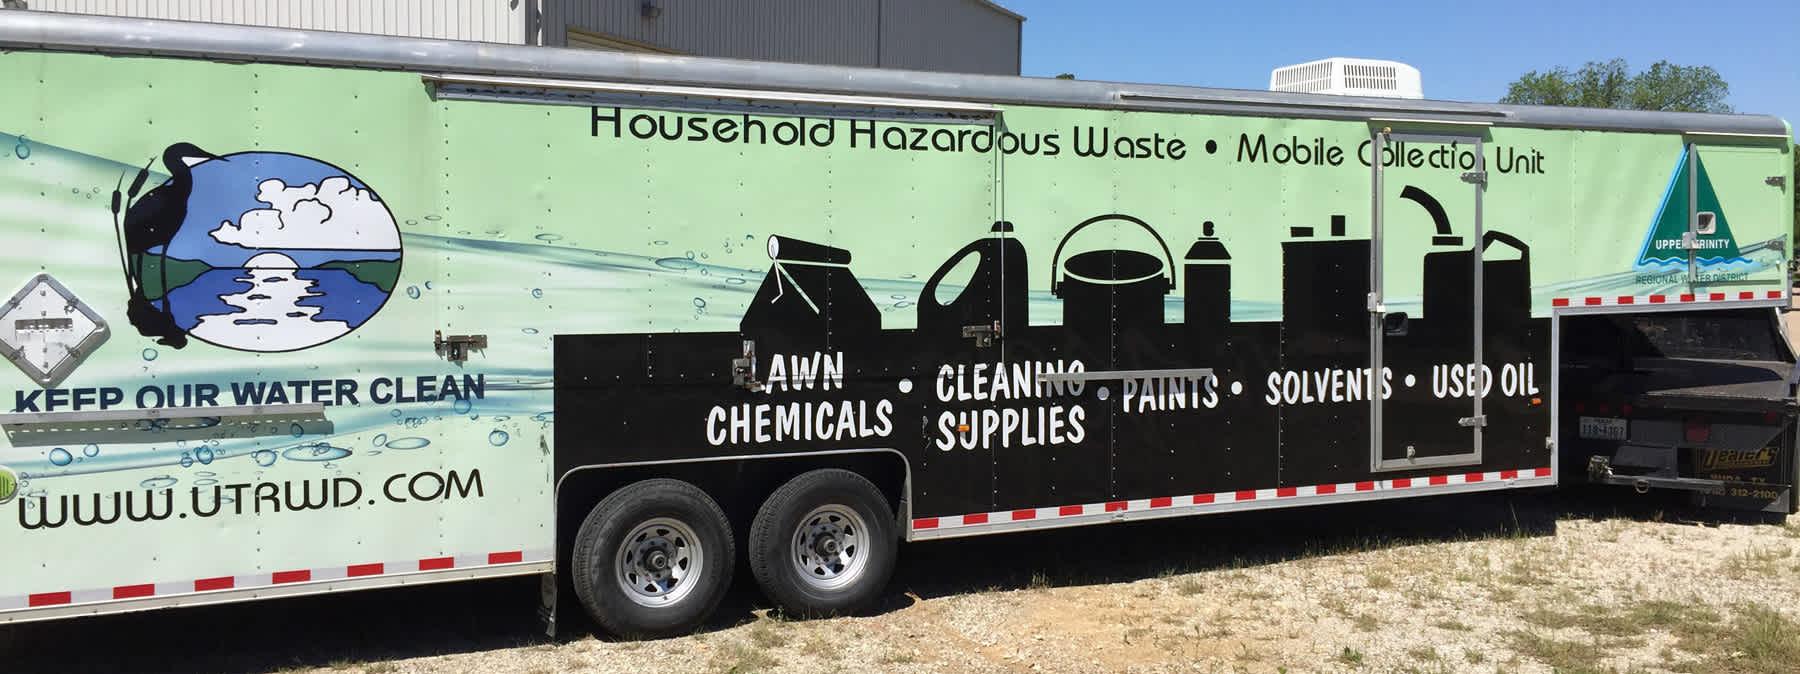 Household Hazardous Waste Mobile Collection Unit